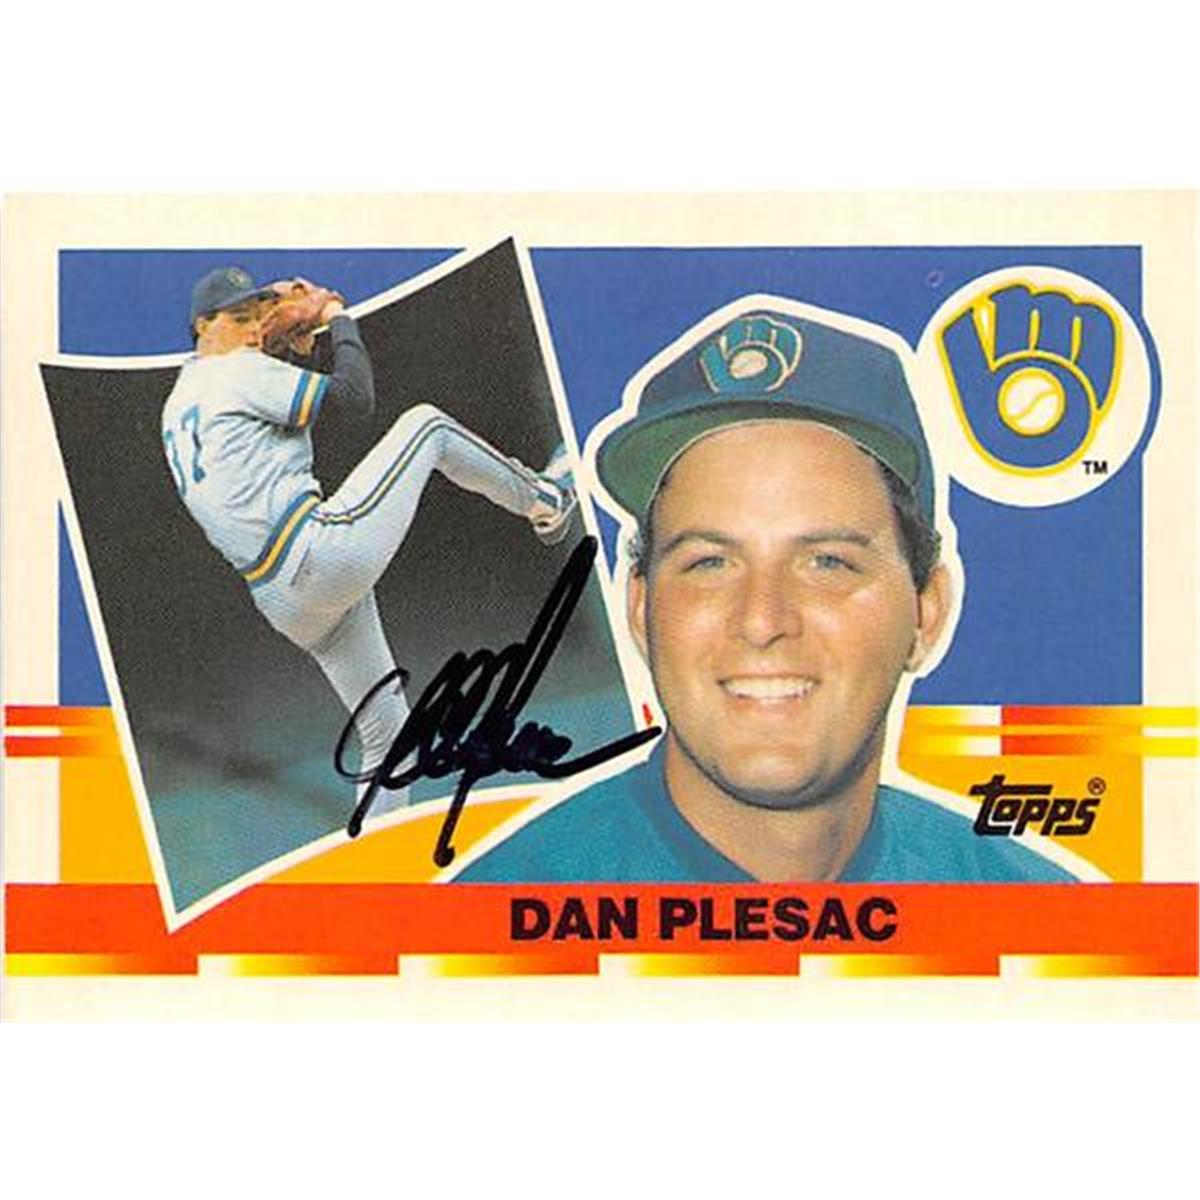 Autograph Warehouse 344585 Dan Plesac Autographed Baseball Card - Milwaukee Brewers 1990 Topps No. 33 Big